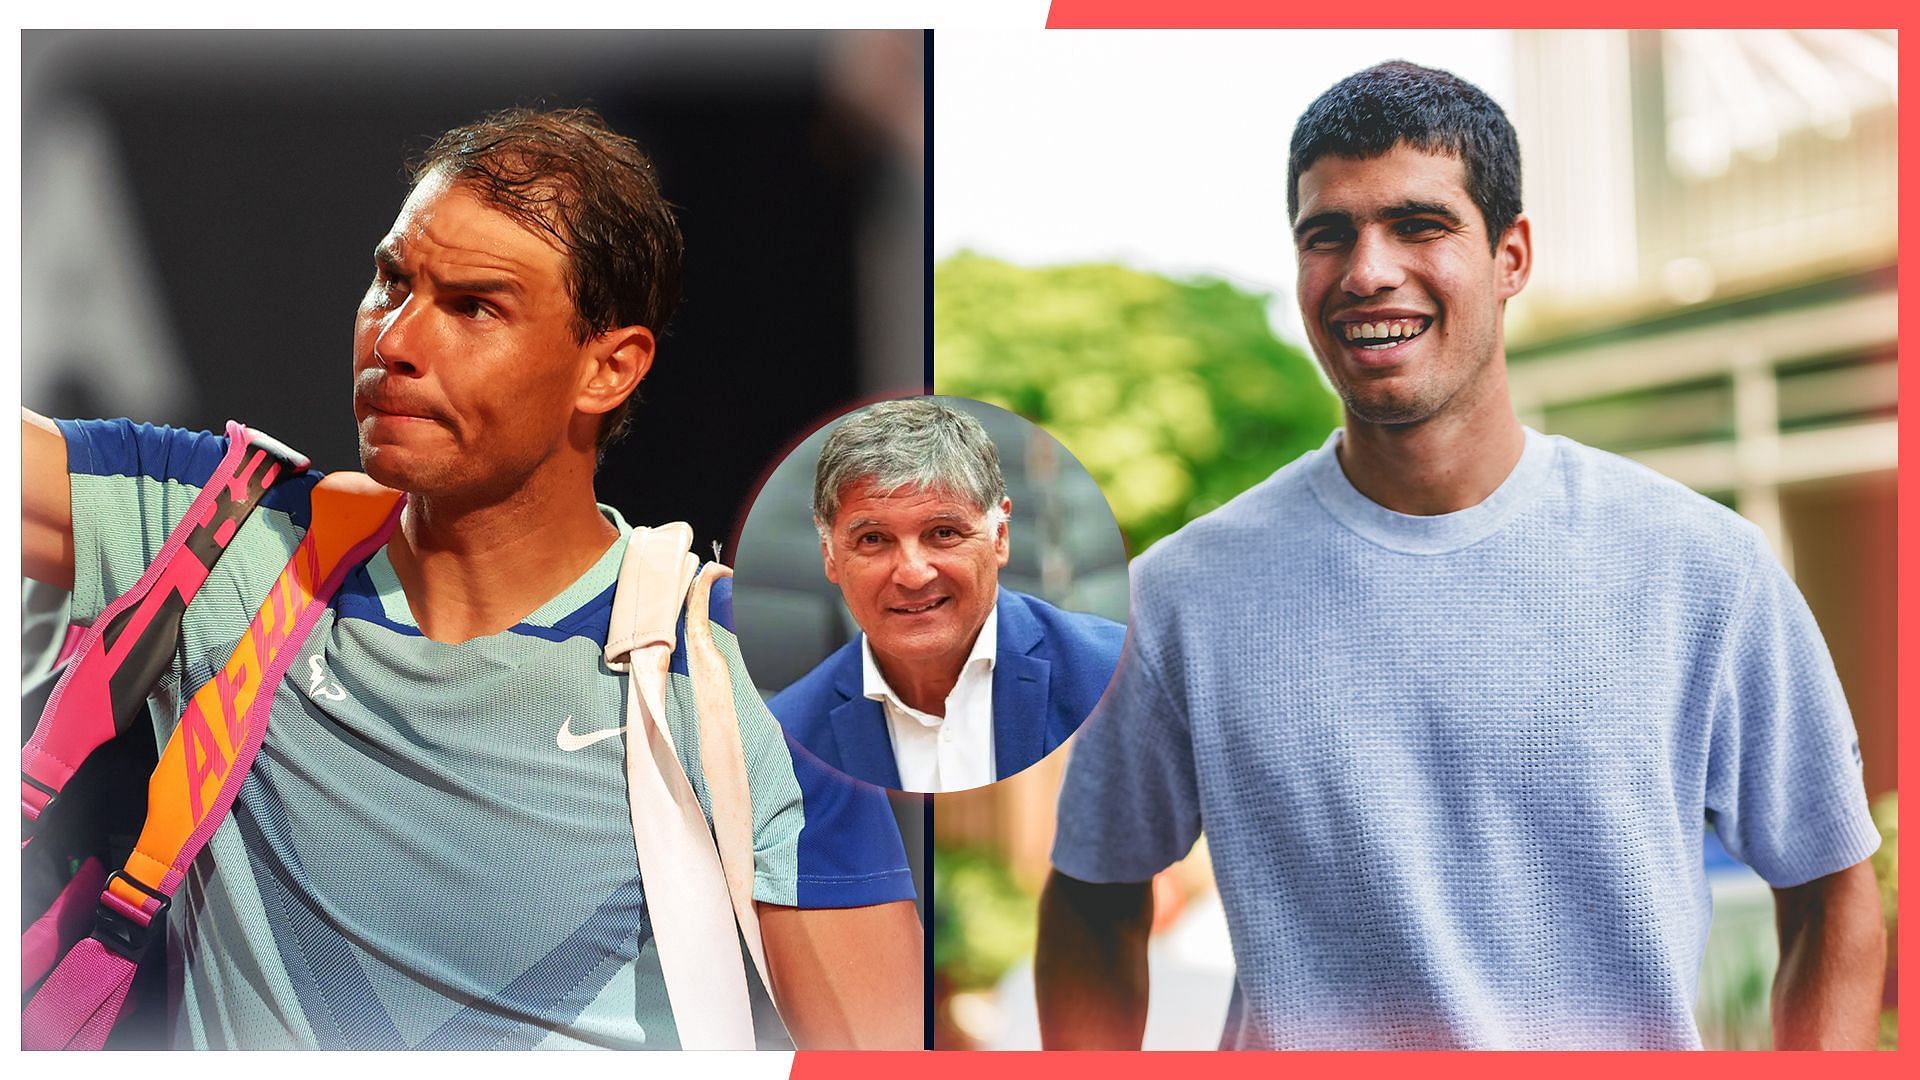 Toni Nadal speaks about Rafael Nadal